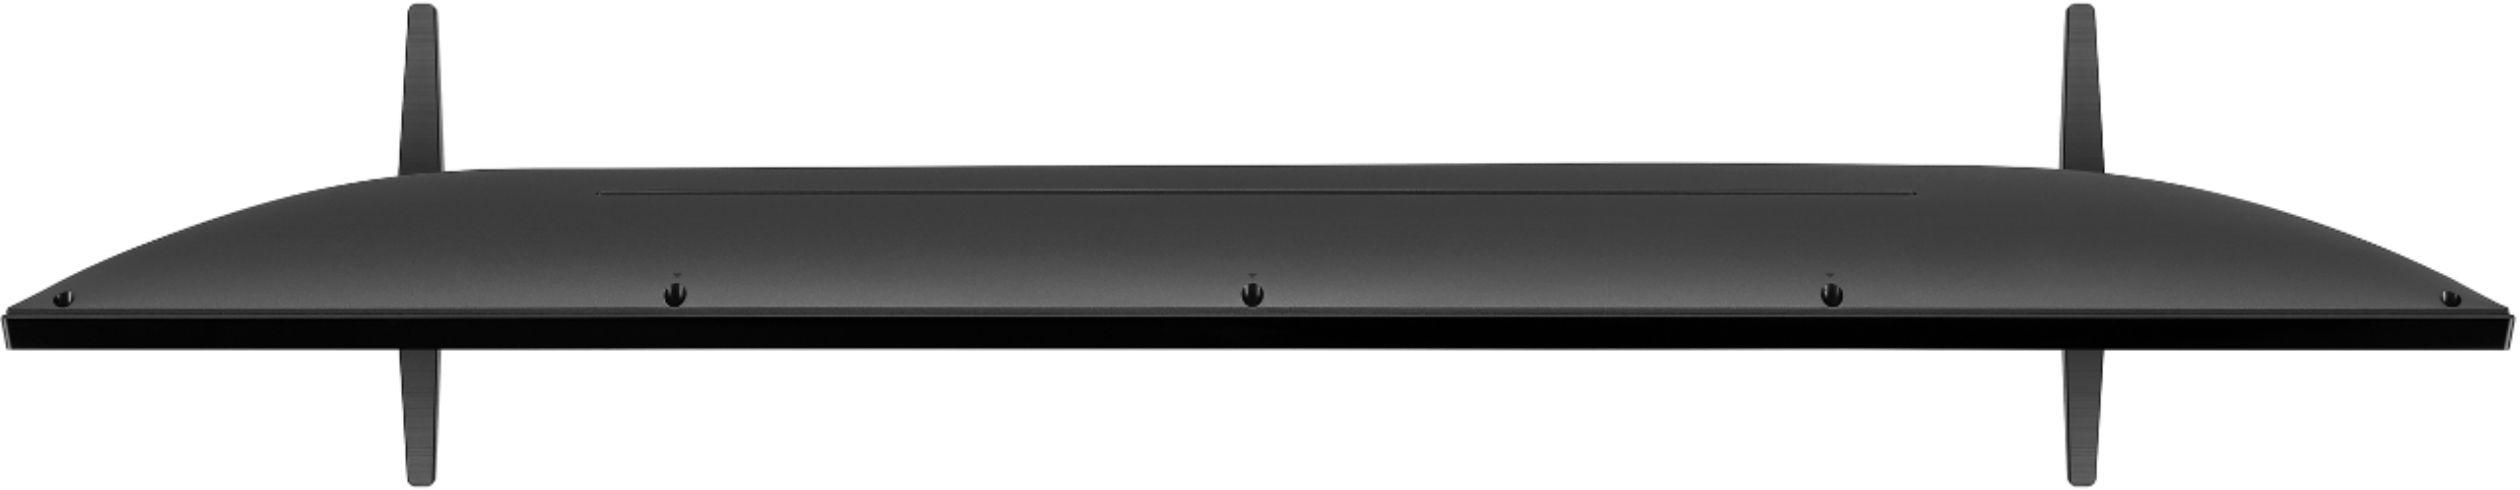 LG UHD 4K TV 55 Inch UN73 Series, 4K Active HDR WebOS Smart AI